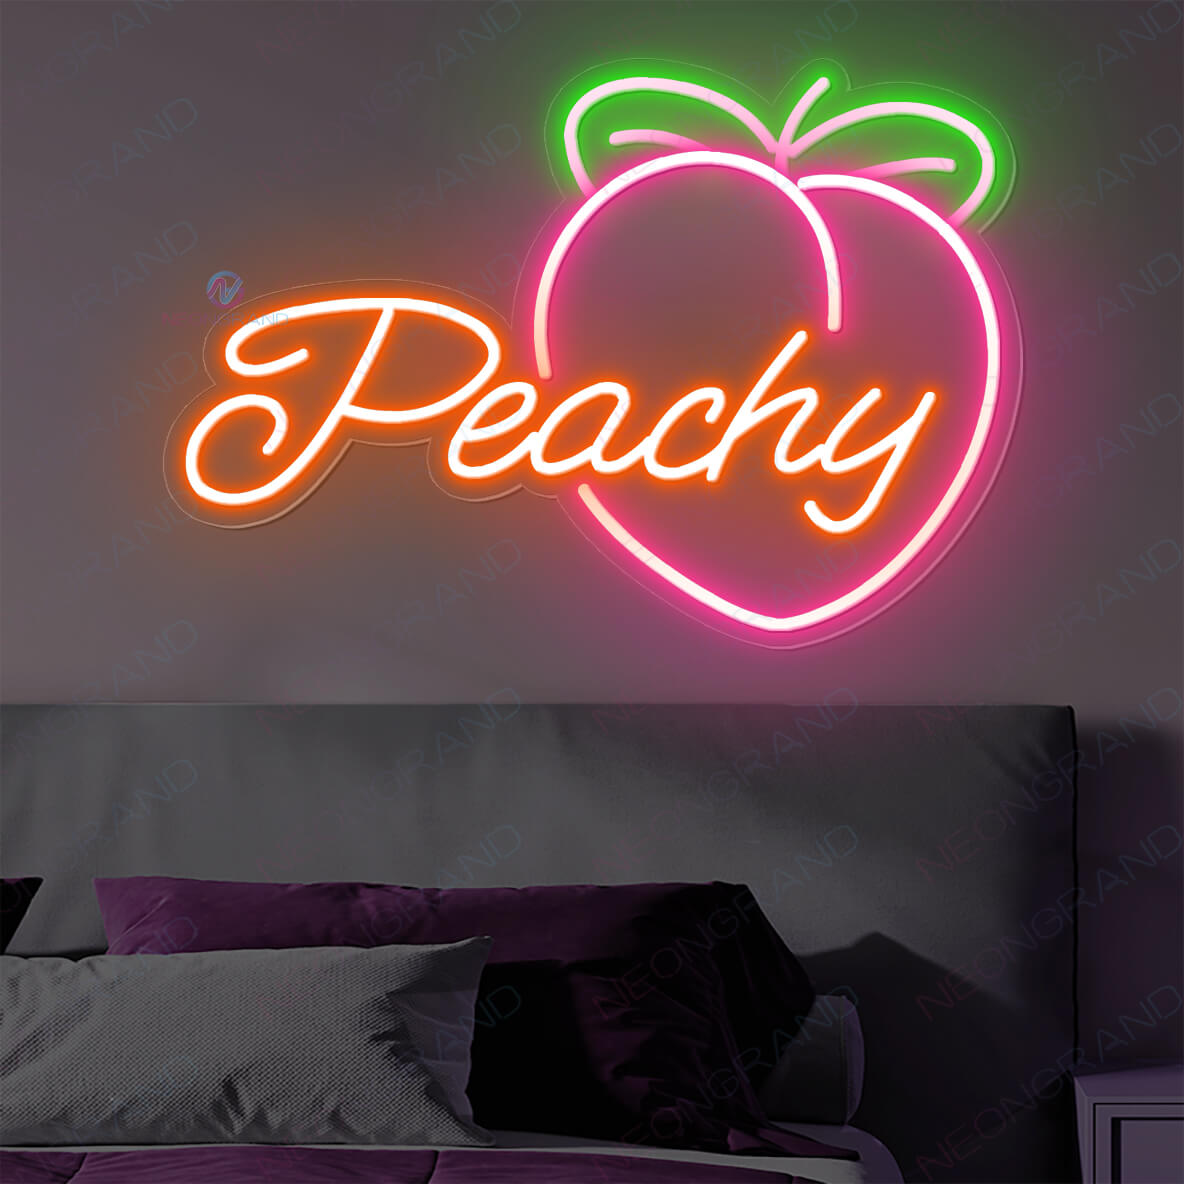 Peachy Neon Sign Peach Led Light pink